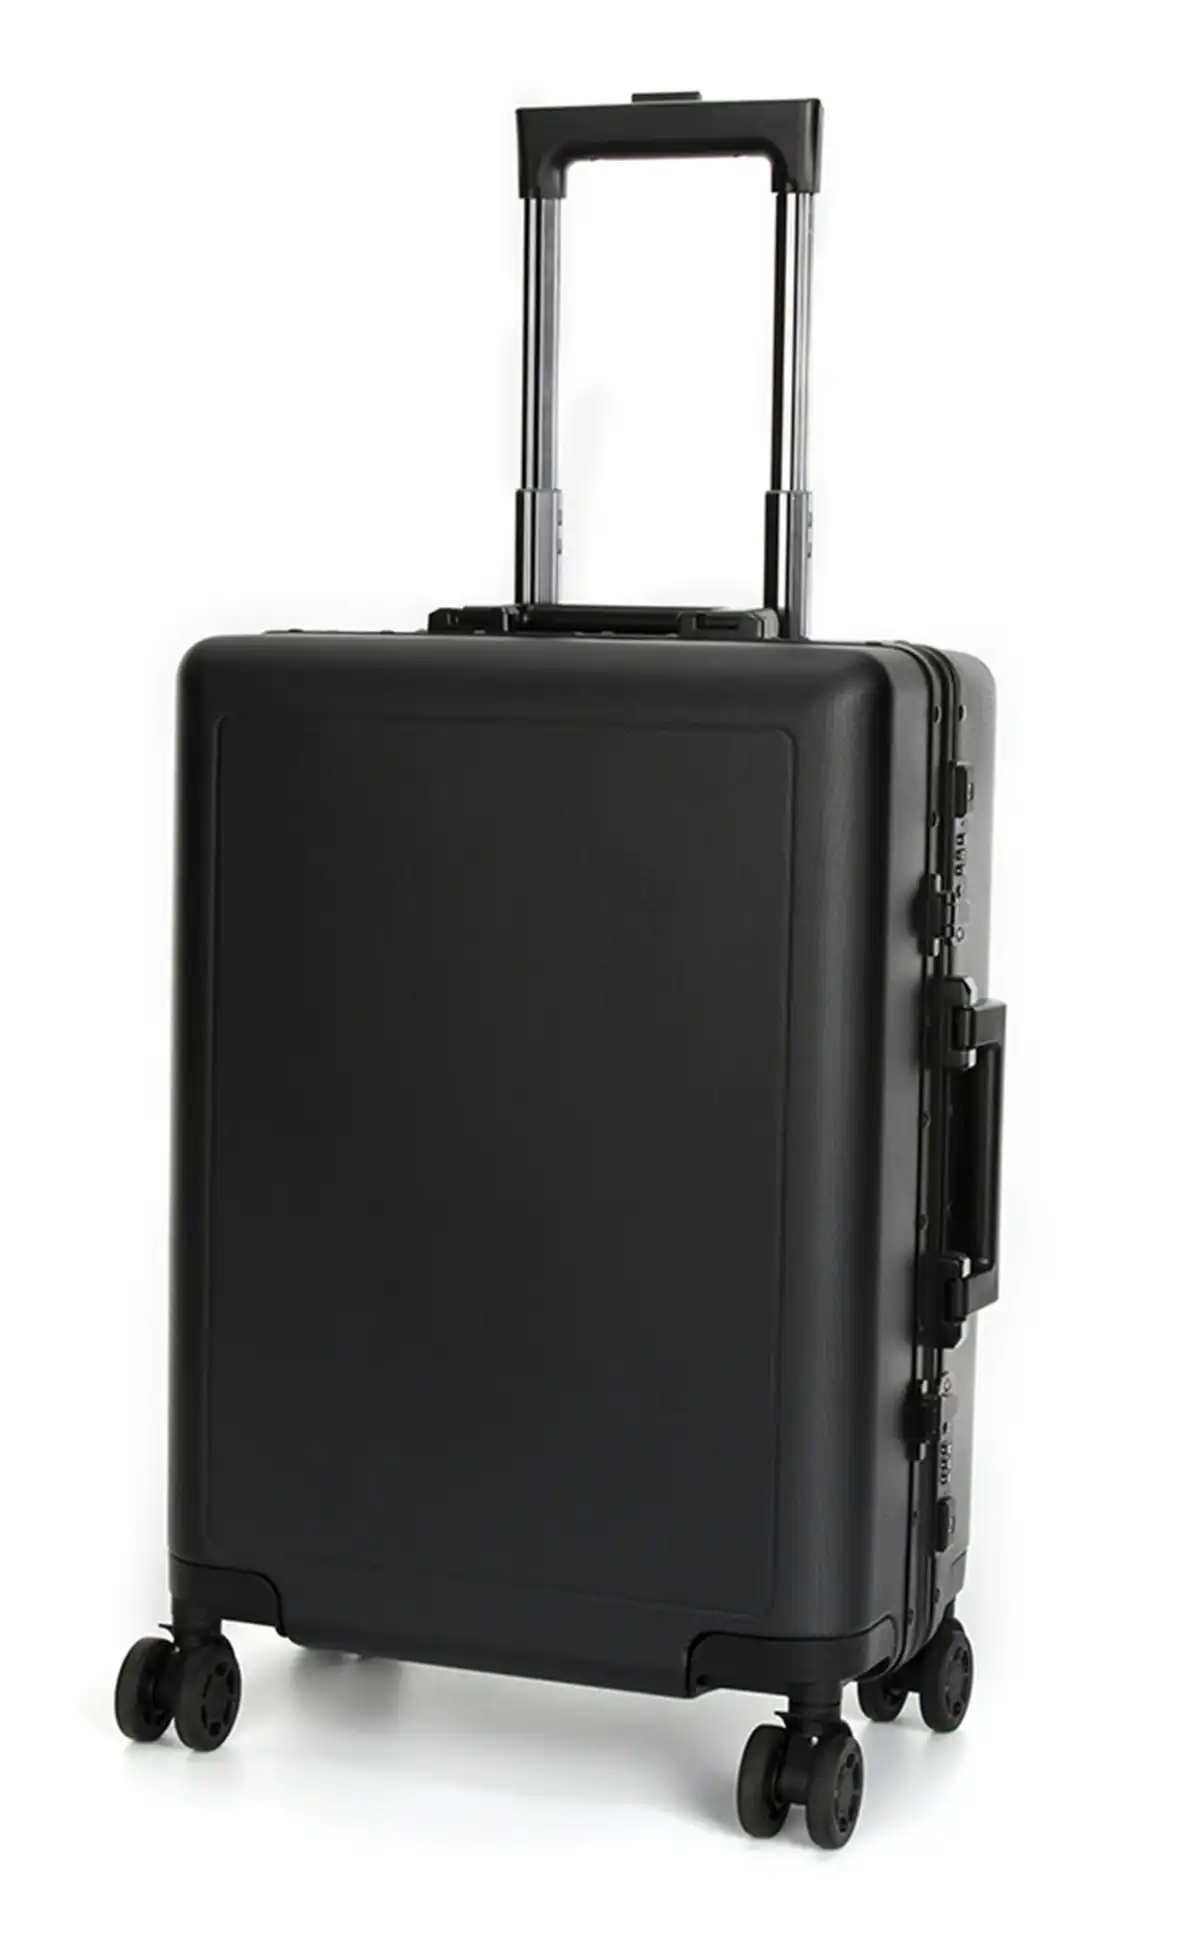 Suissewin Swiss Aluminium Luggage Suitcase Lightweight With TSA Locker 8 Wheels Carry on Hardcase SN7613A Black